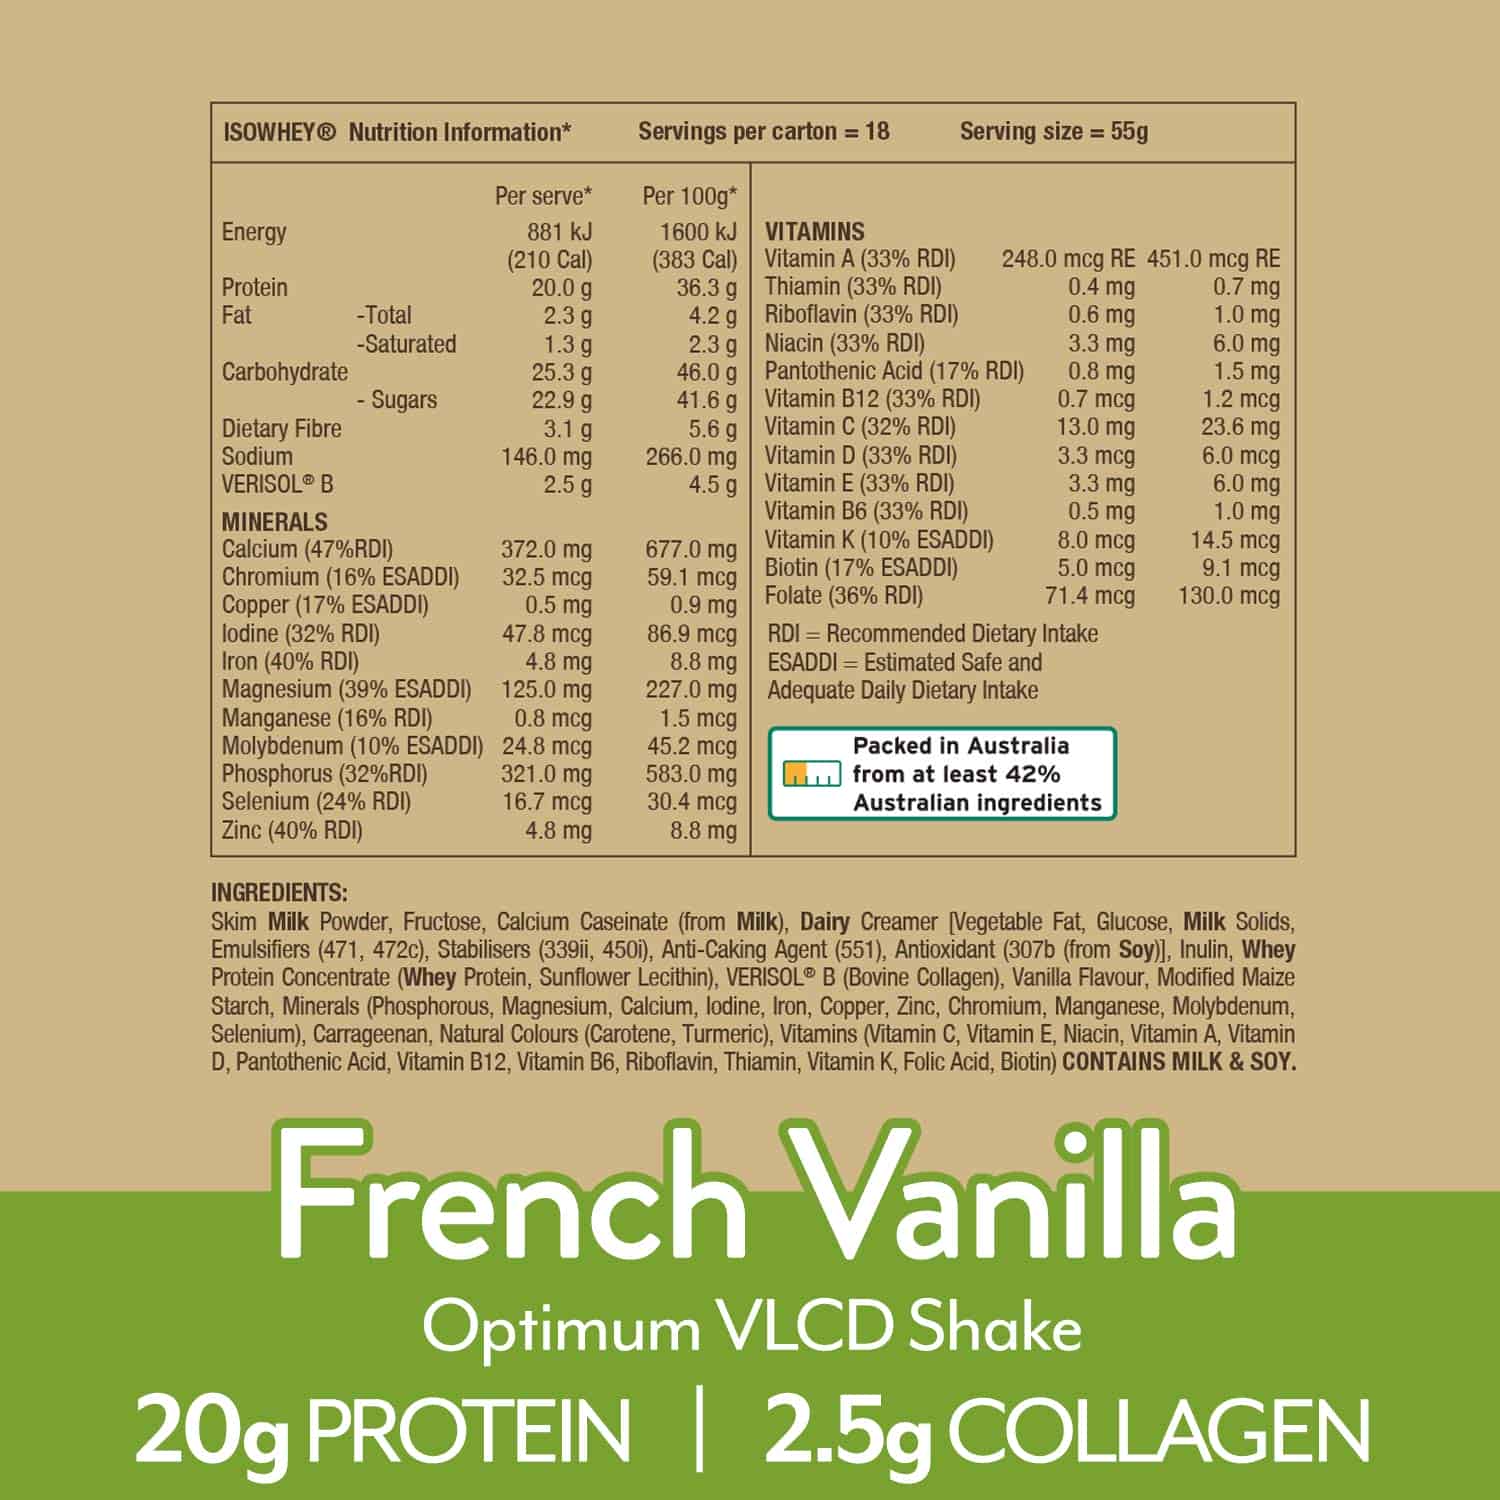 IsoWhey Optimum VLCD Shake French Vanilla 55g nutritional information